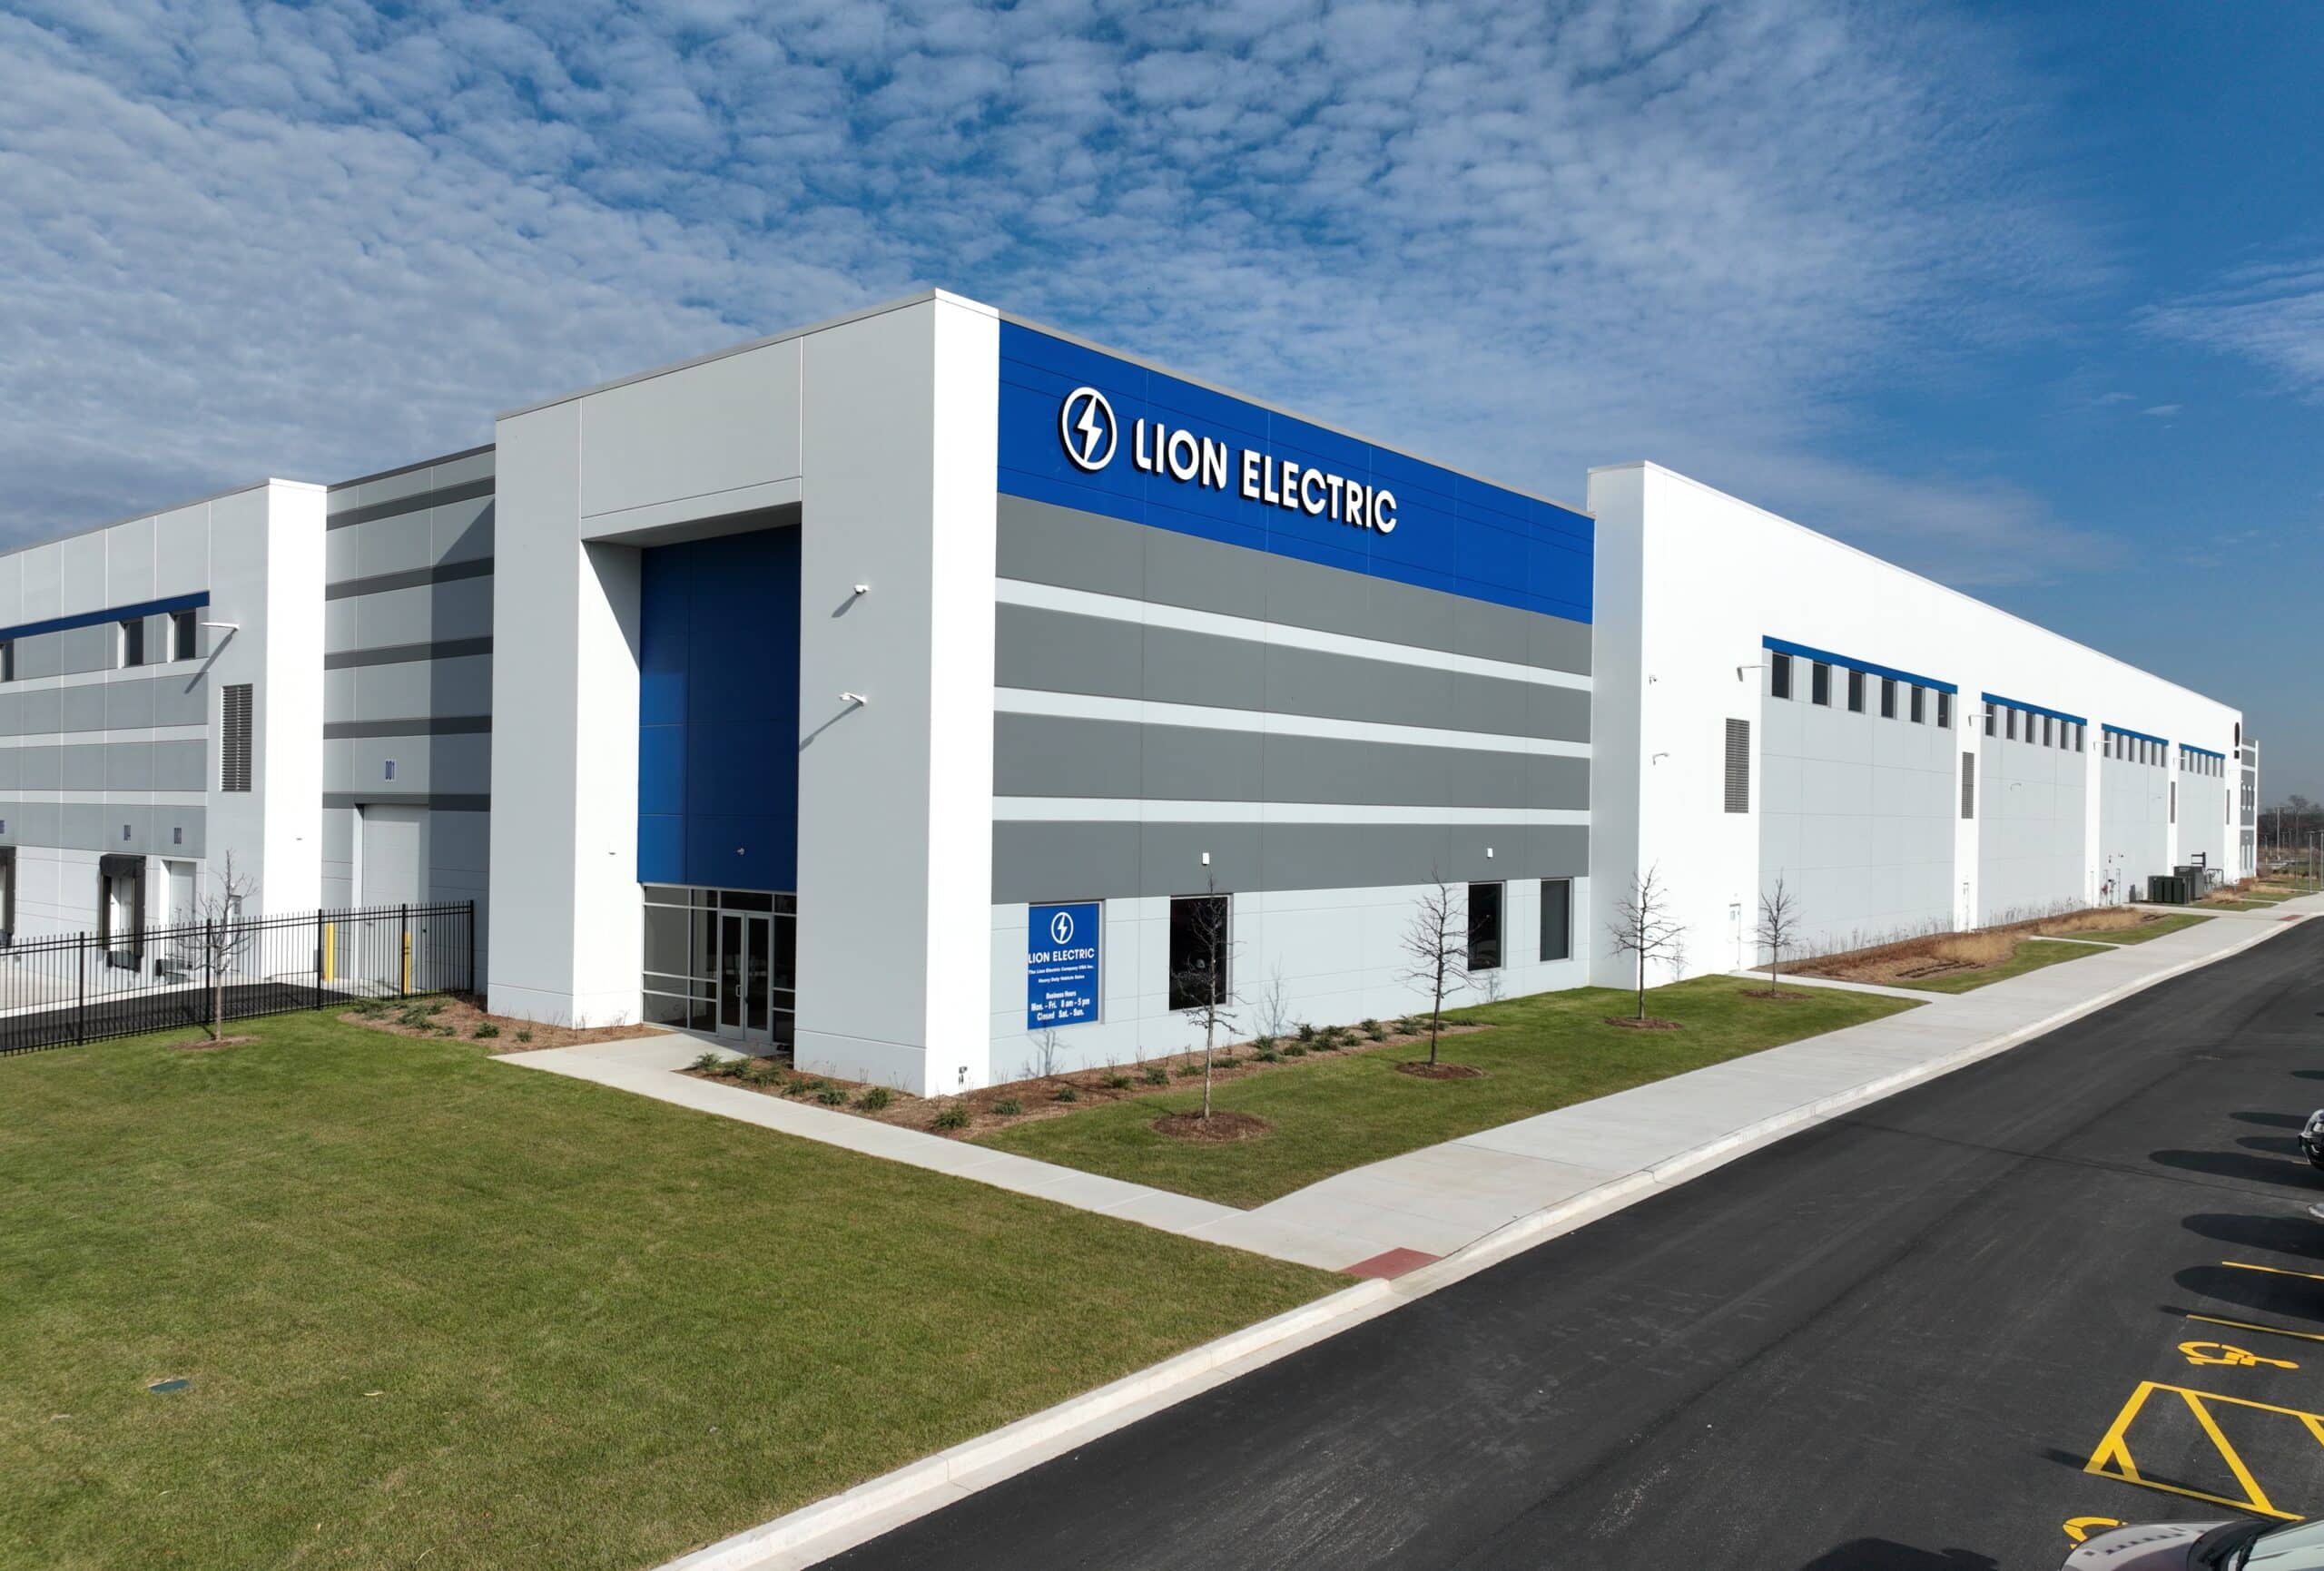 Lion Electric Launches Largest US AllElectric Vehicle Plant The EV